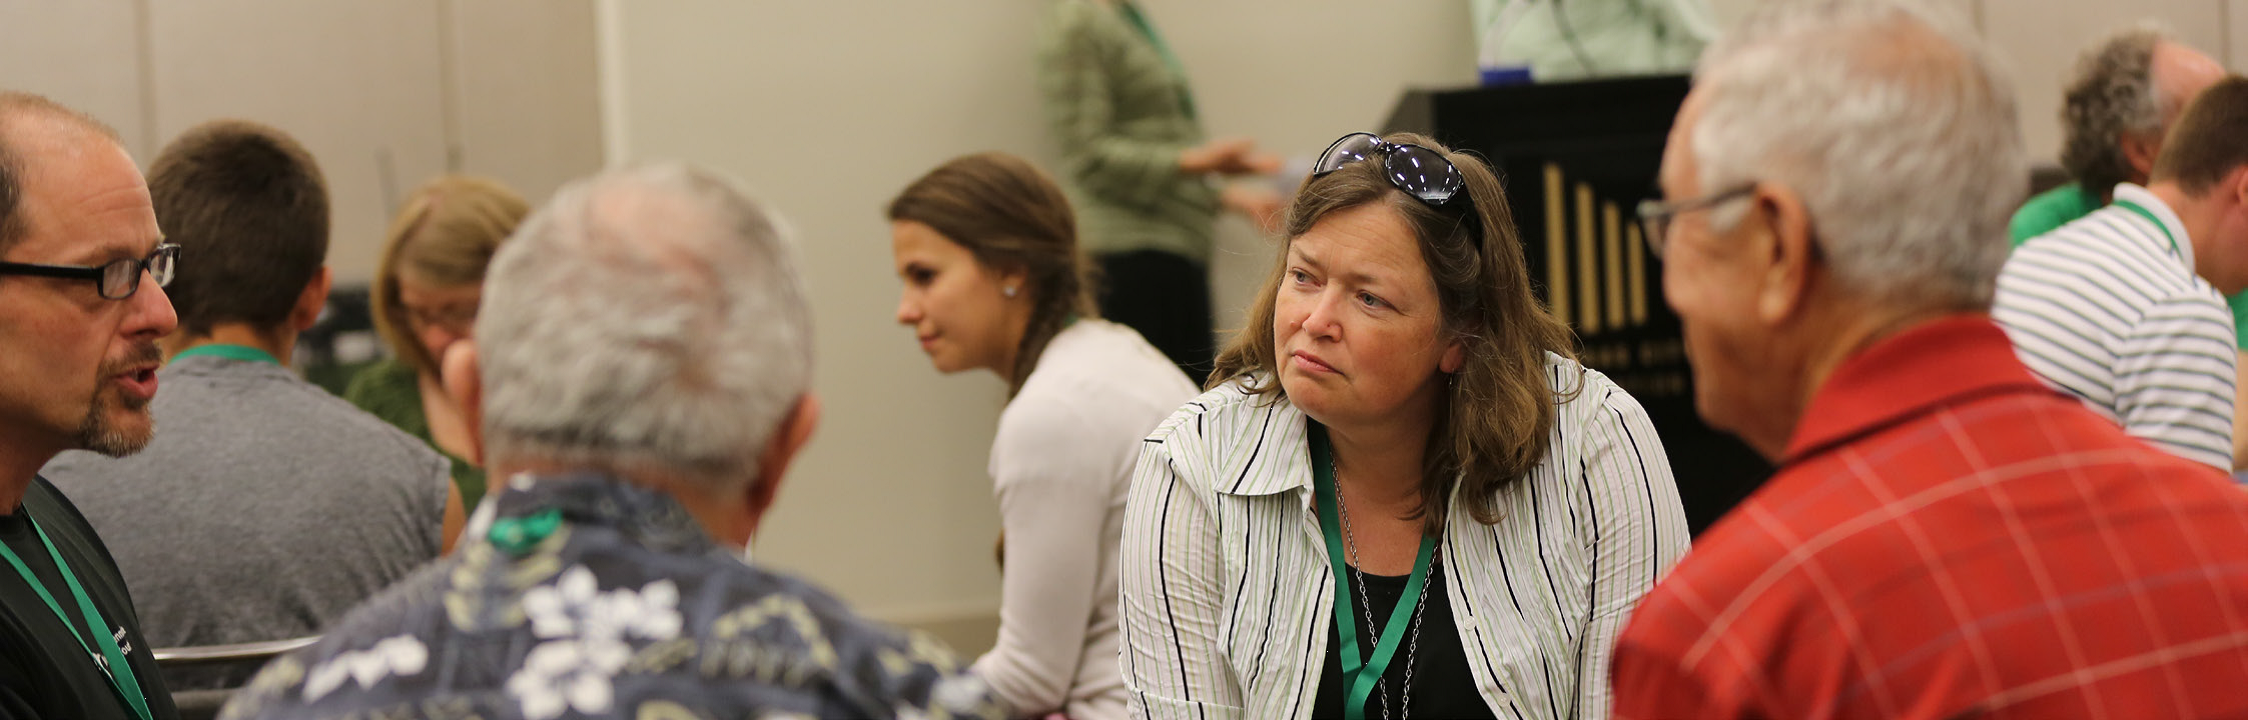 Loretta Miller listens as group members express views concerning ISIS. Photo Credit: Meg Short